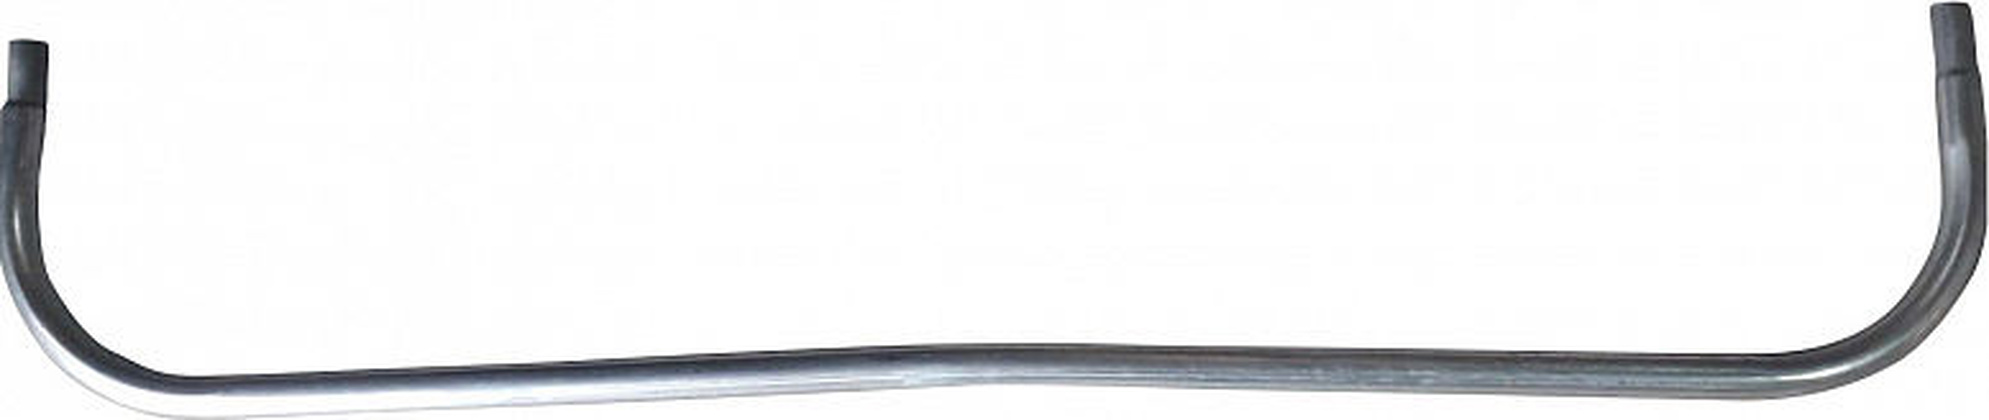 Ножка для батута MiSoon 10ft-4-PRO